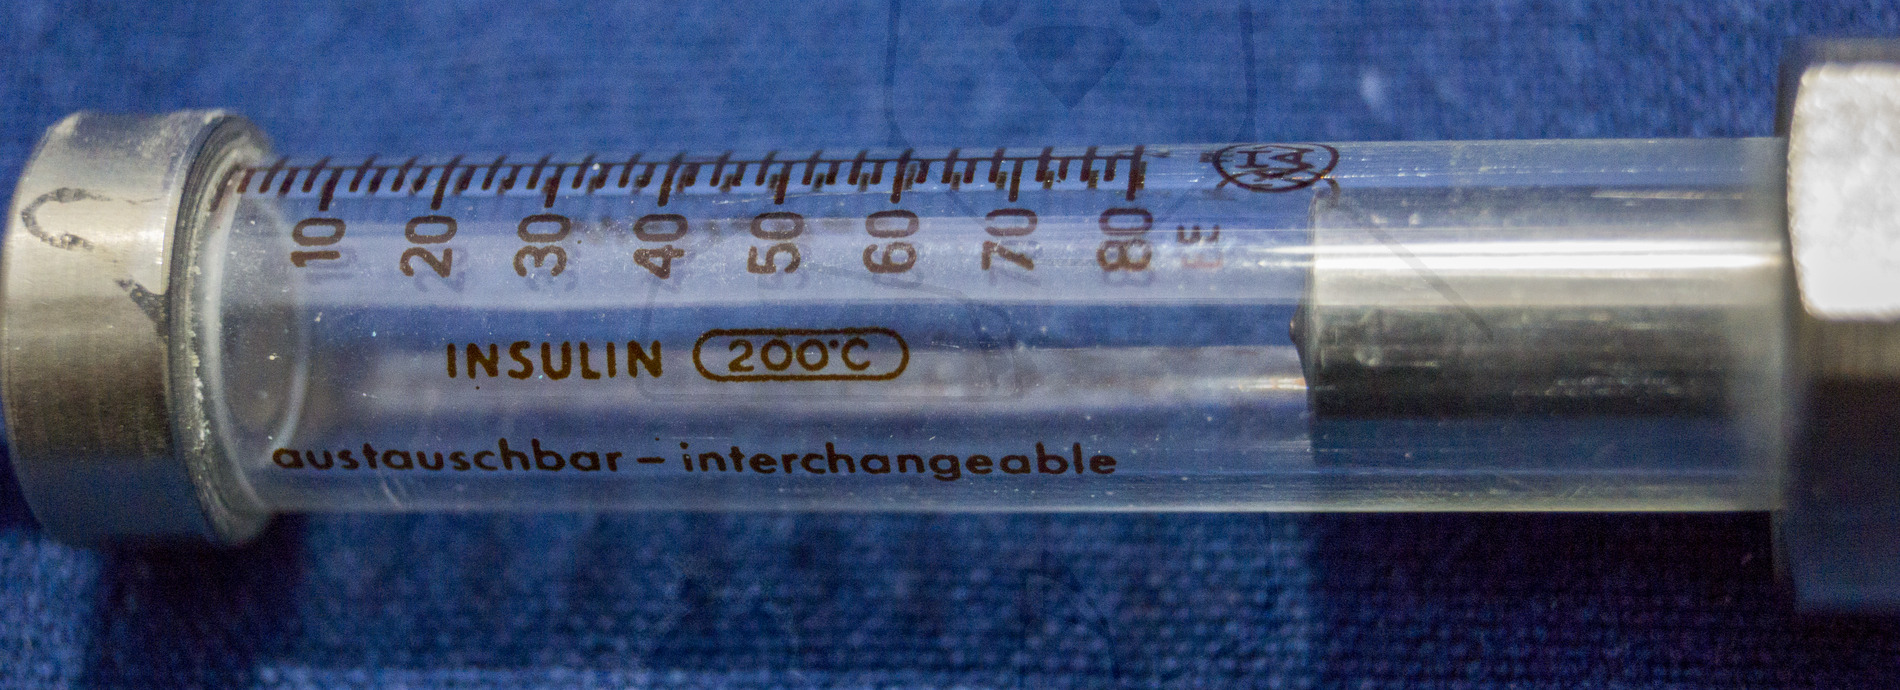 Insulininjektor "Diarapid", 1963'er Jahre, Detailaufnahme Kolben